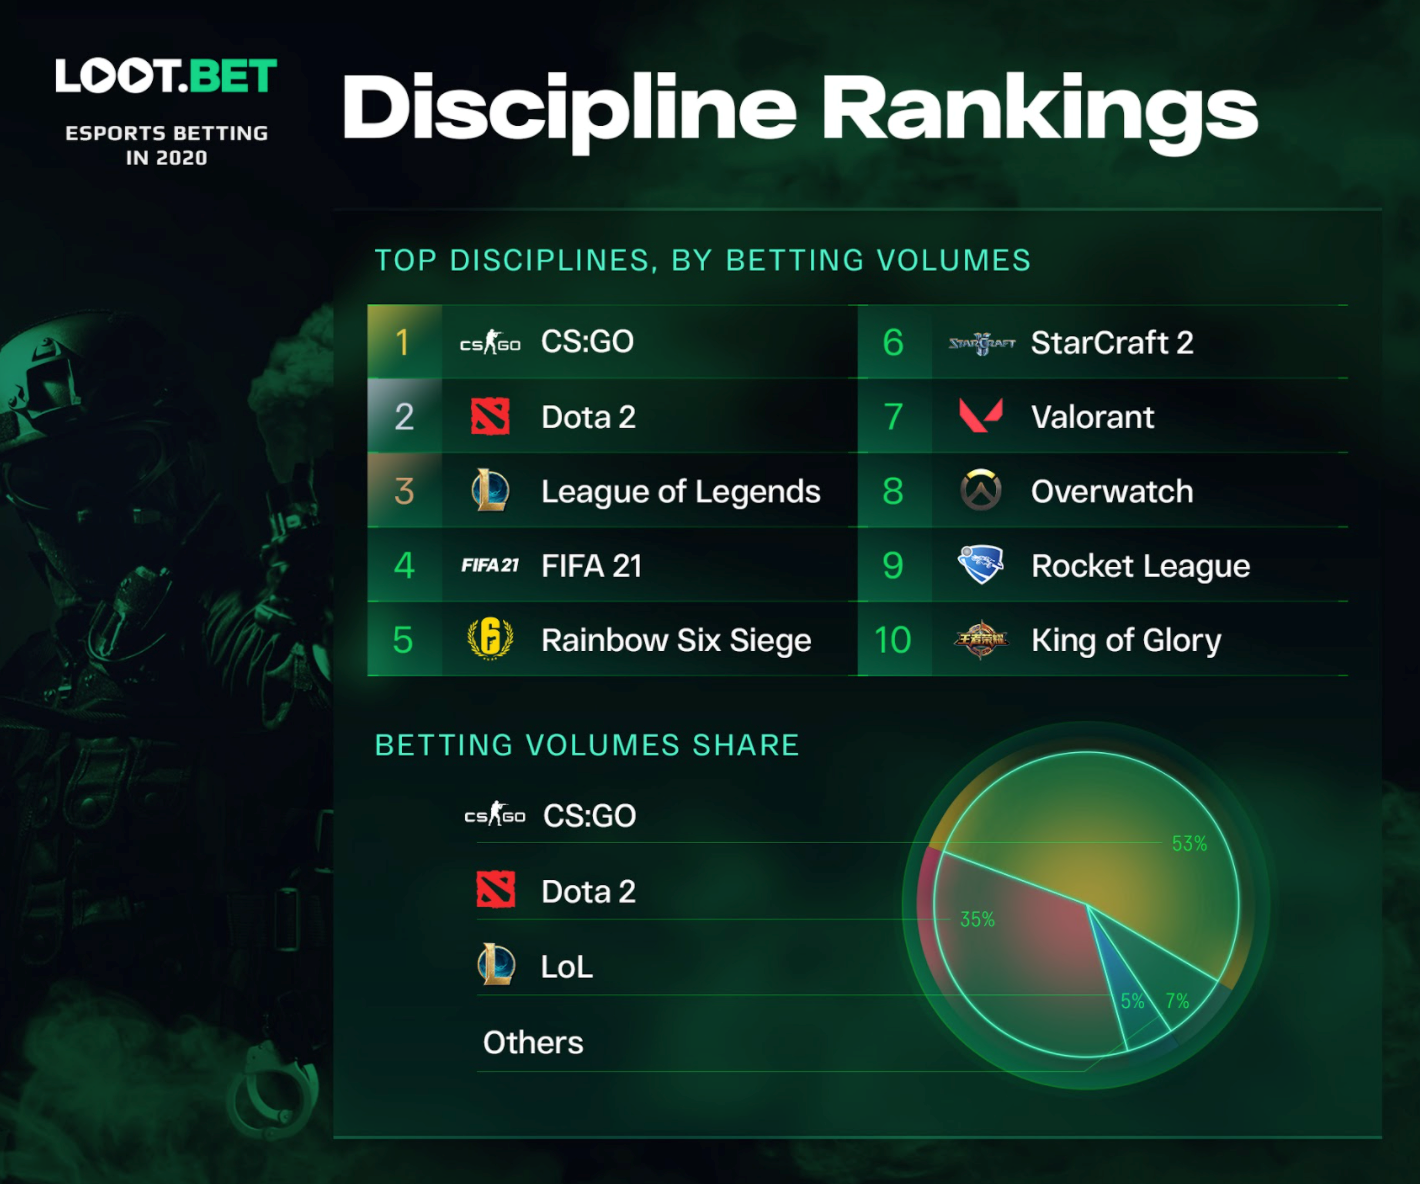 Discipline rankings